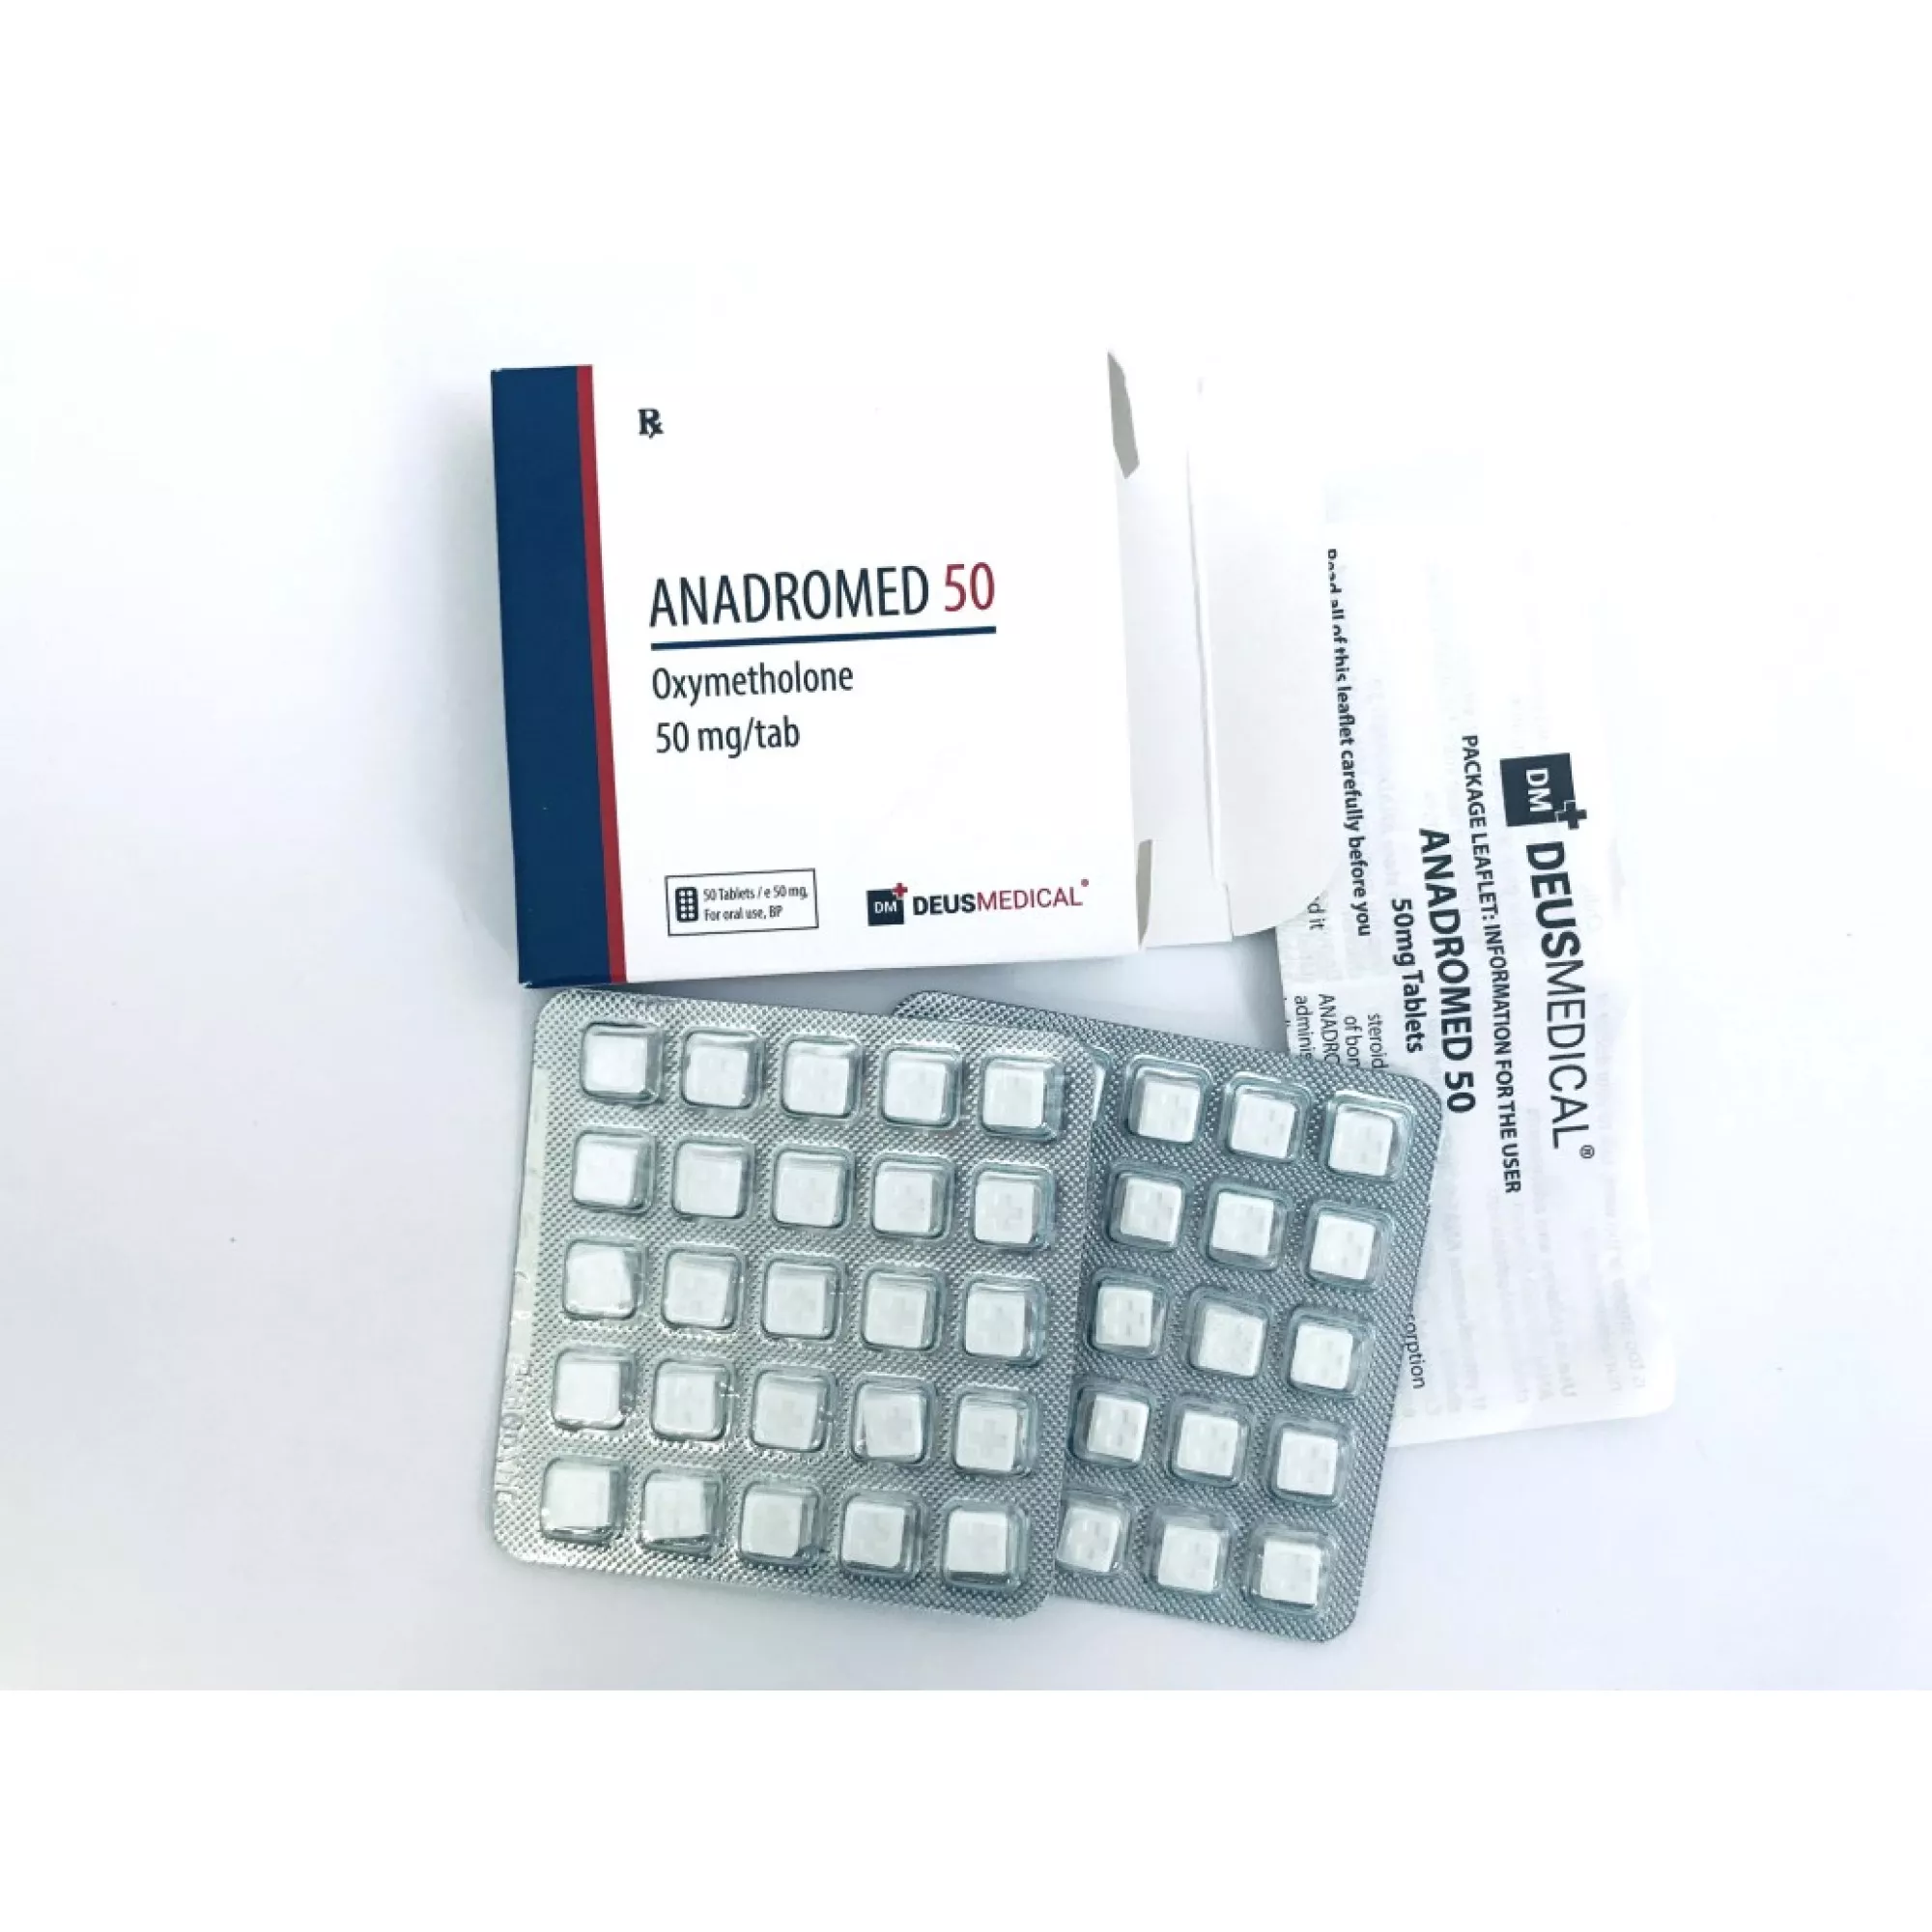 ANADROMED 50 (Oxymetholone), Deus Medical, Buy Steroids Online - www.deuspower.shop